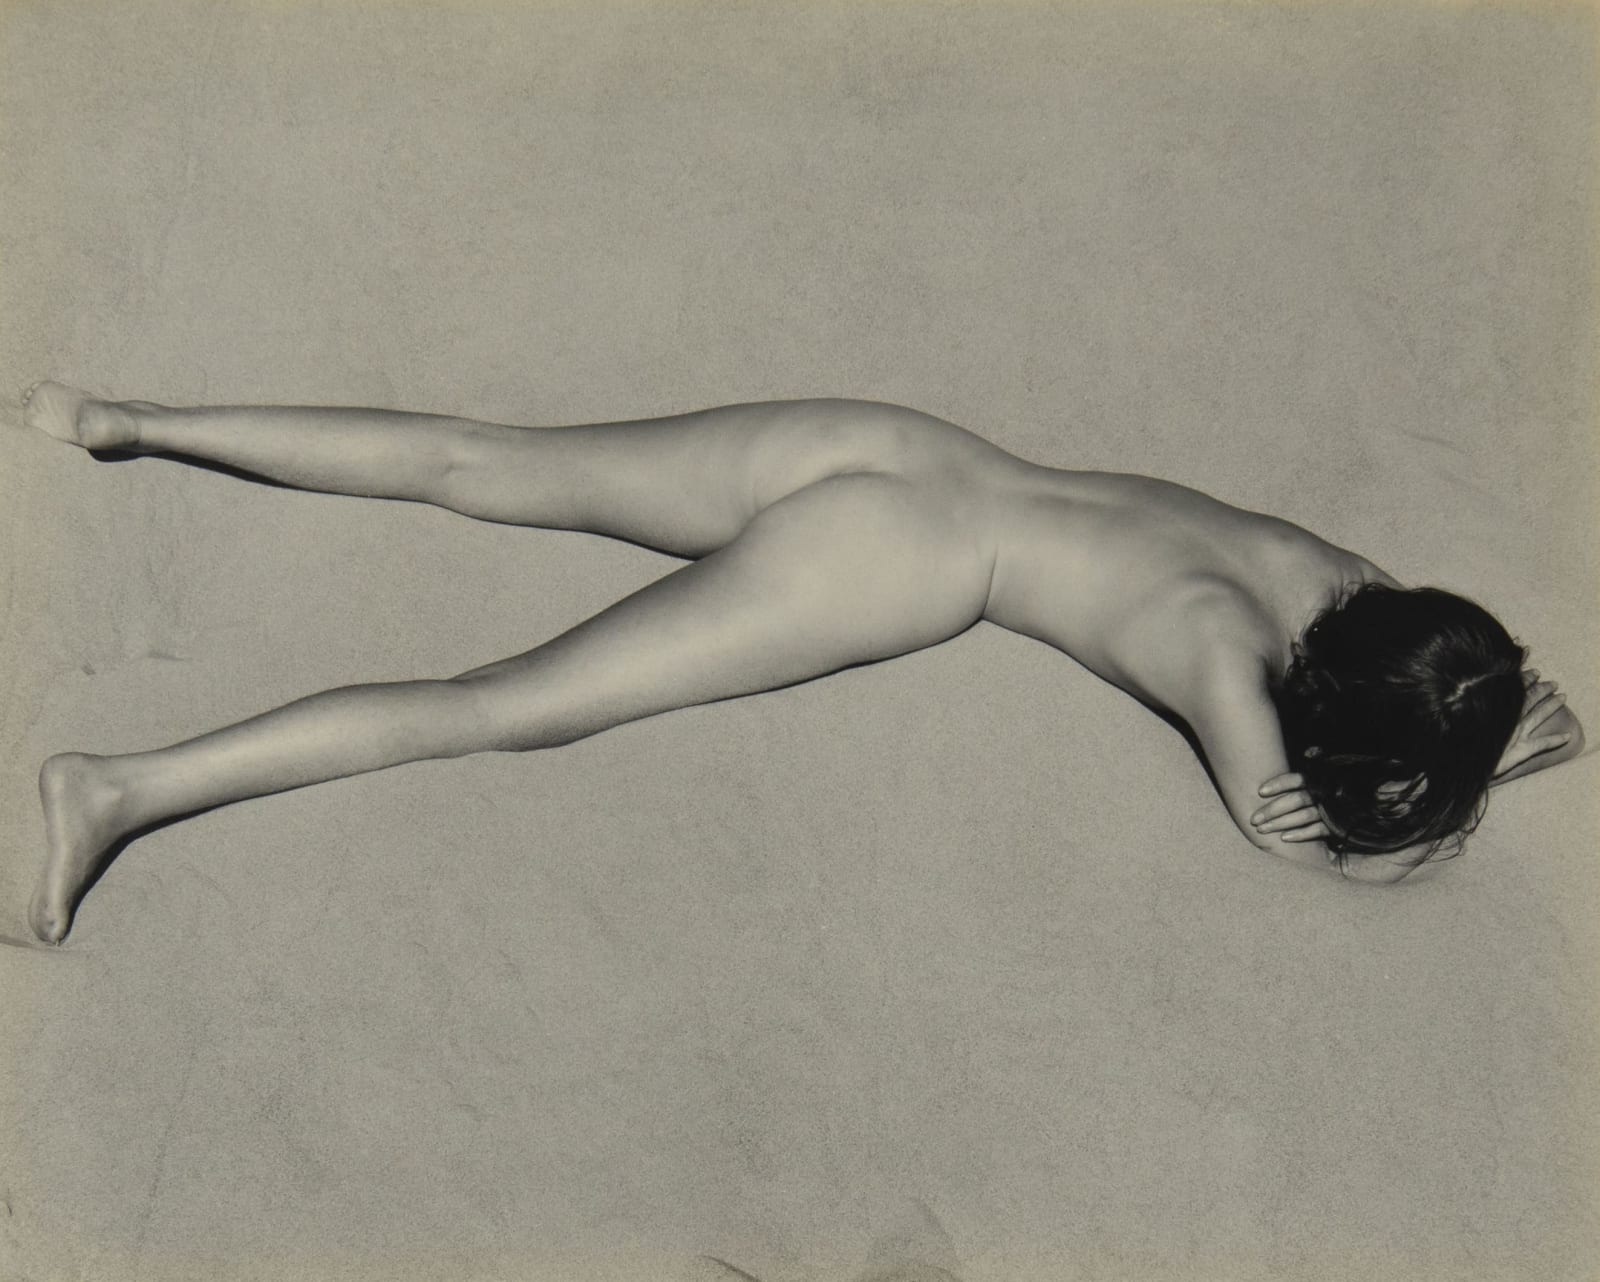 Edward Weston, Nude on Sand, Oceano (Charis, dunes) 237N, 1936